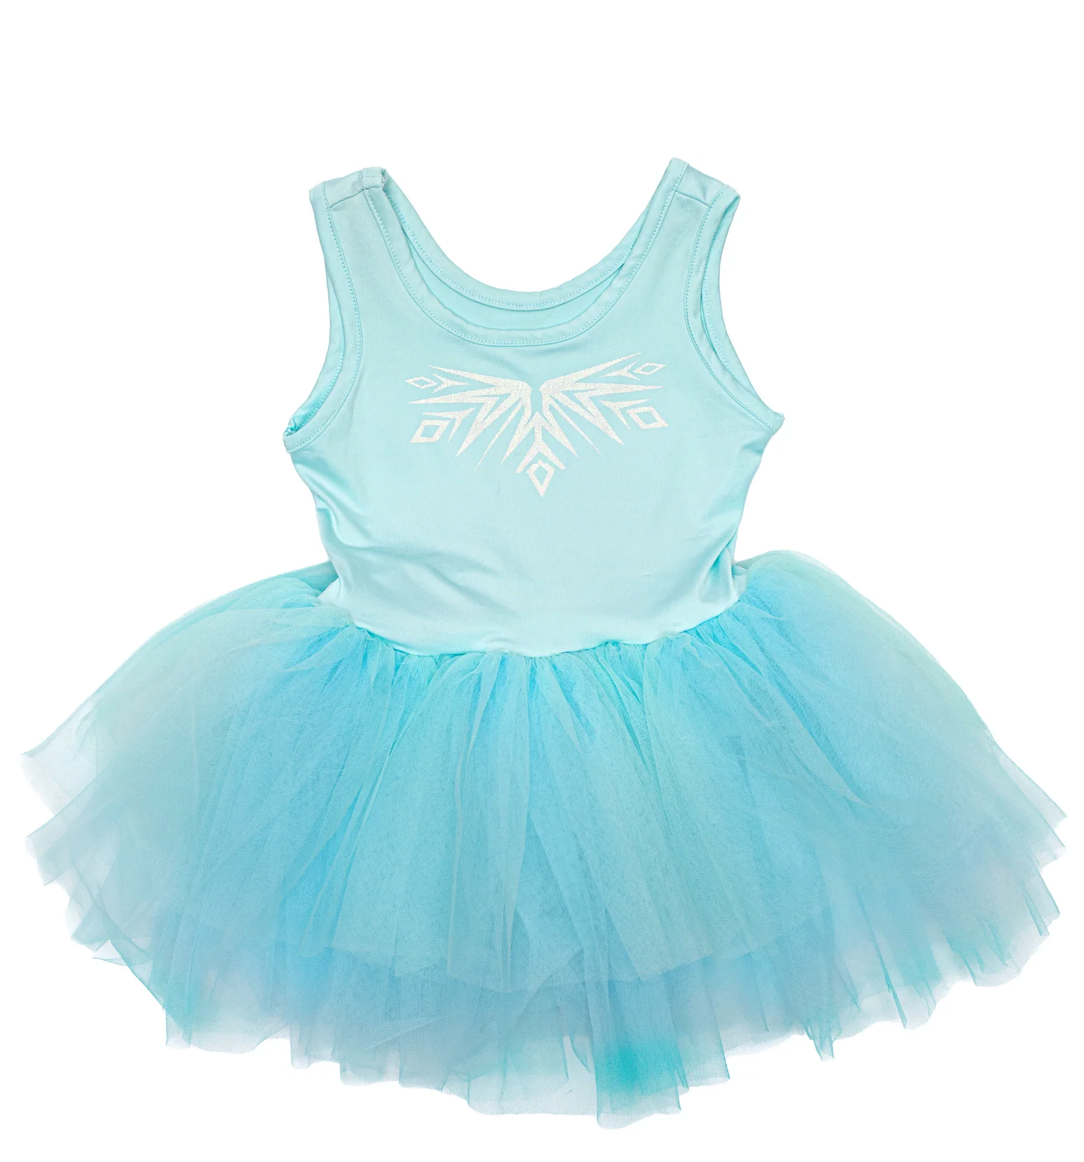 Elsa Ballet Tutu Dress- Pick Your Size